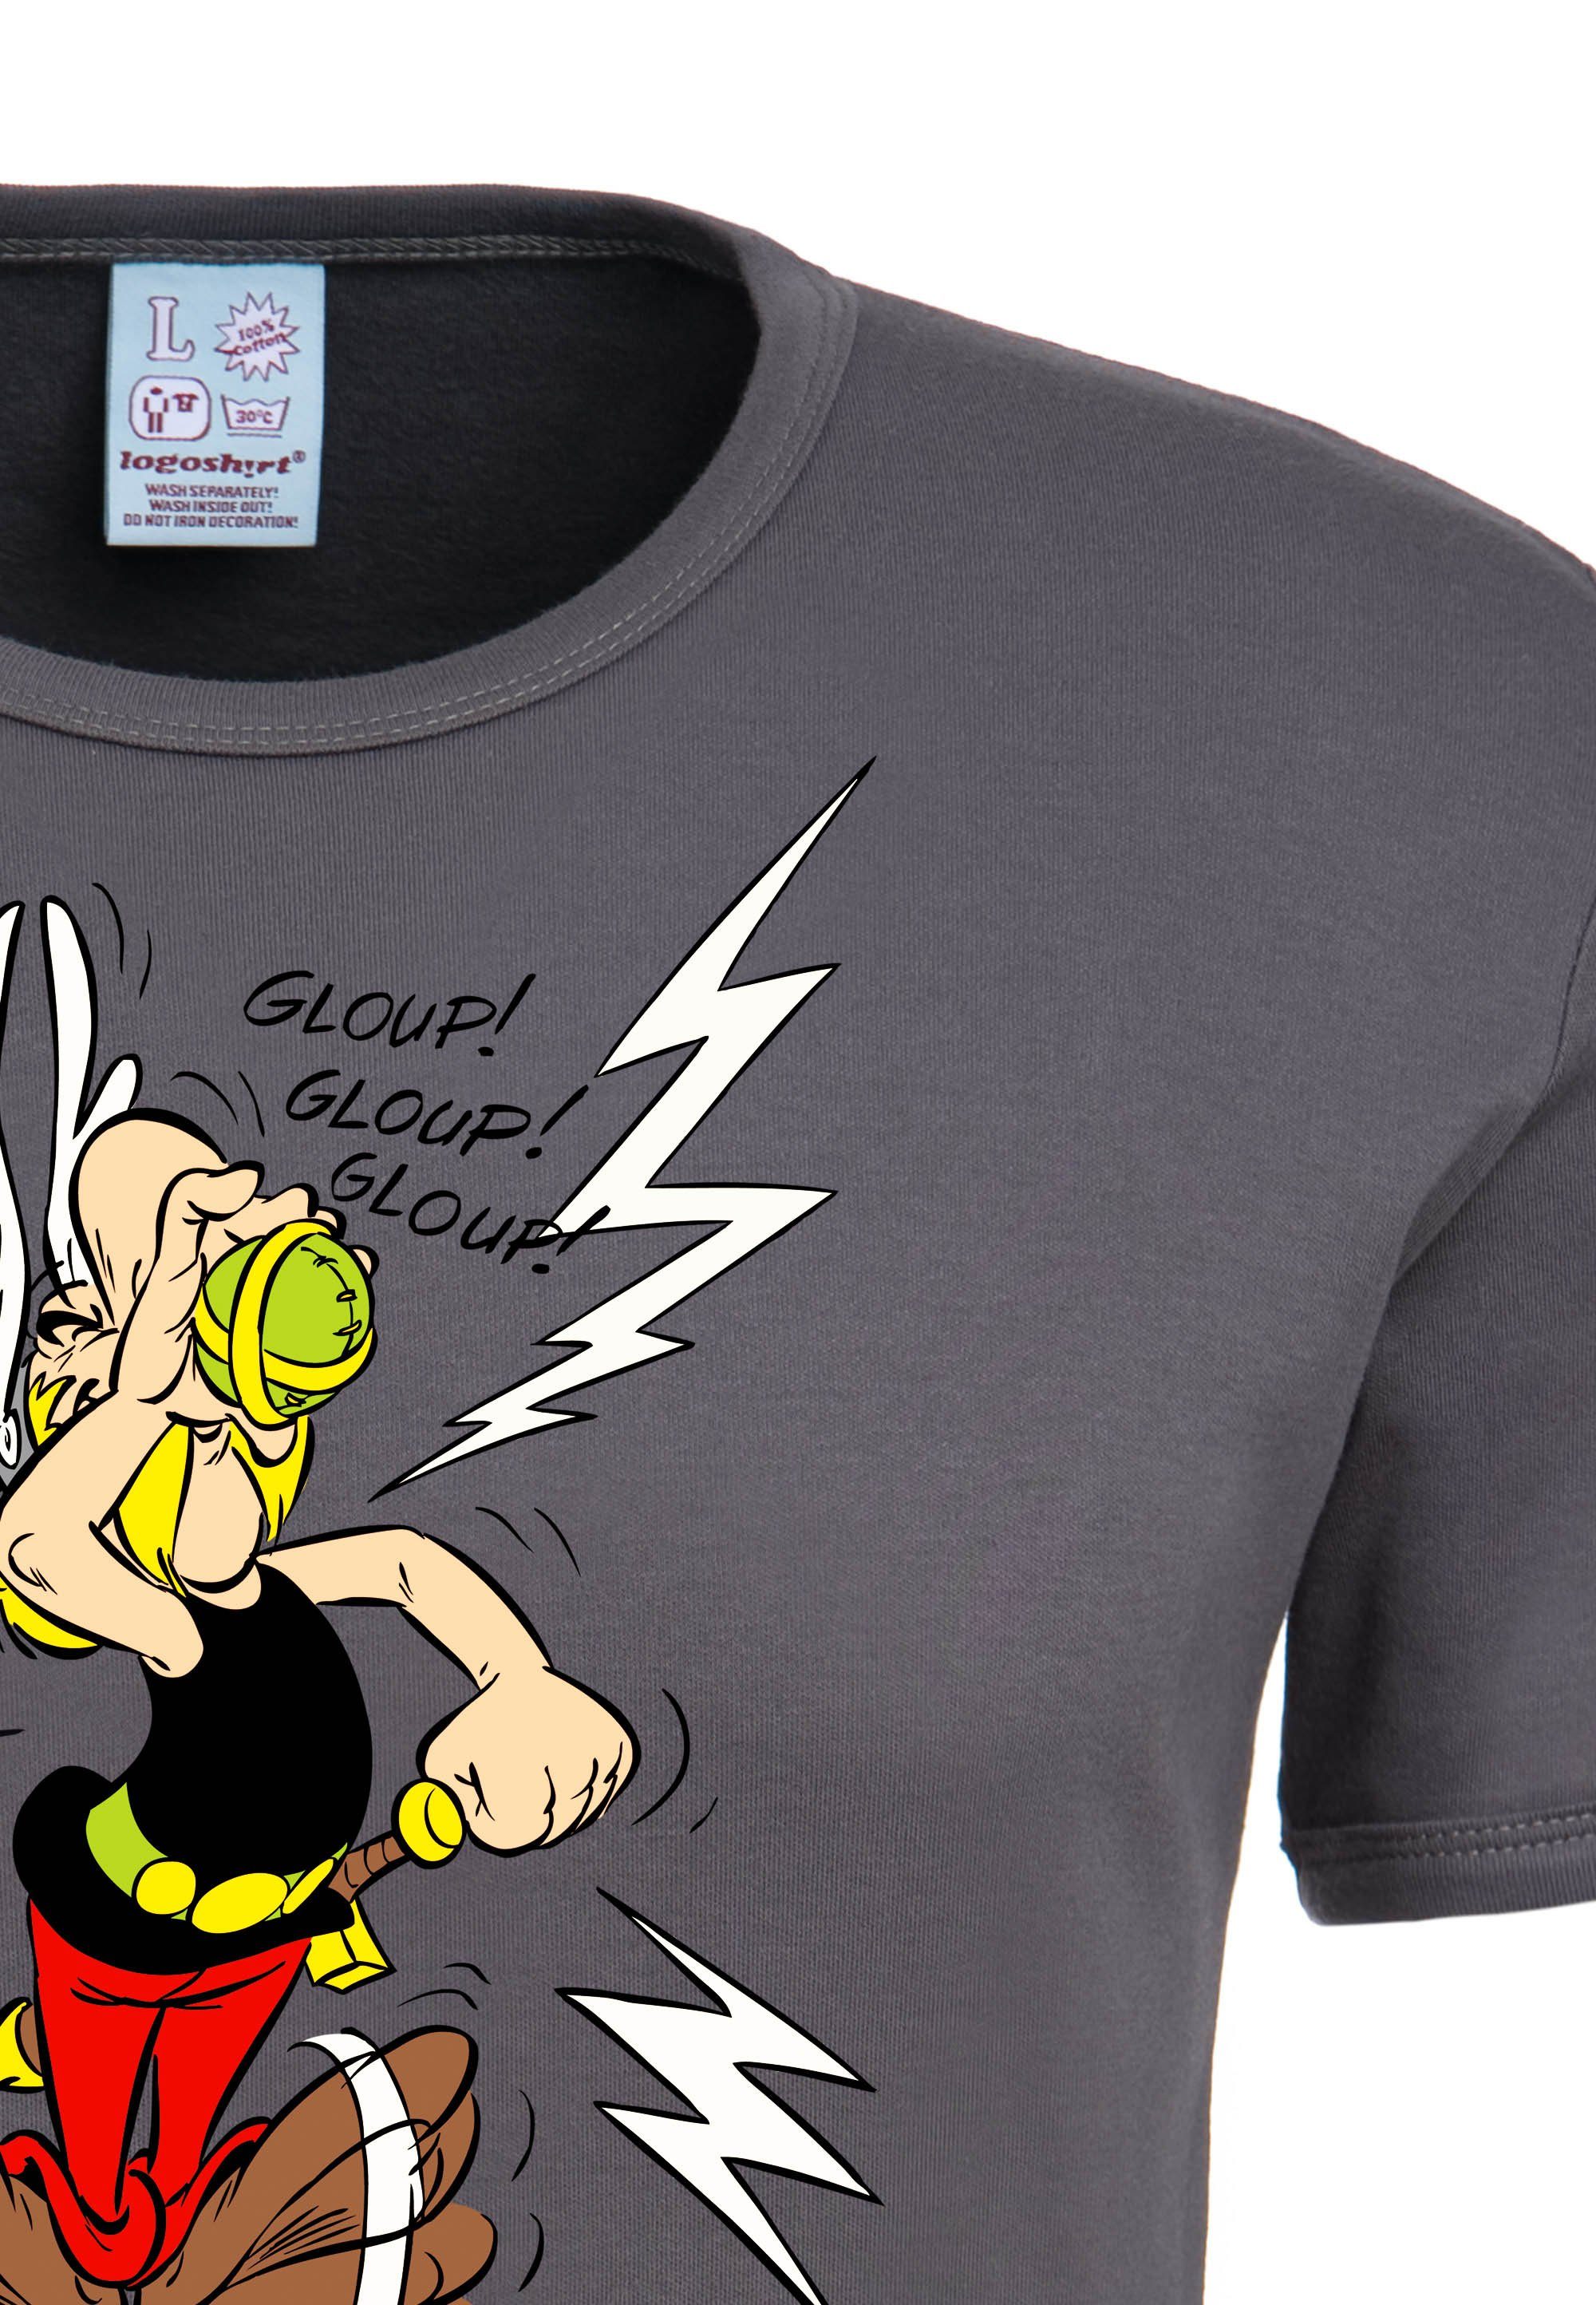 und Asterix- Gaulois grau mit Asterix T-Shirt Le LOGOSHIRT Zaubertrank-Print